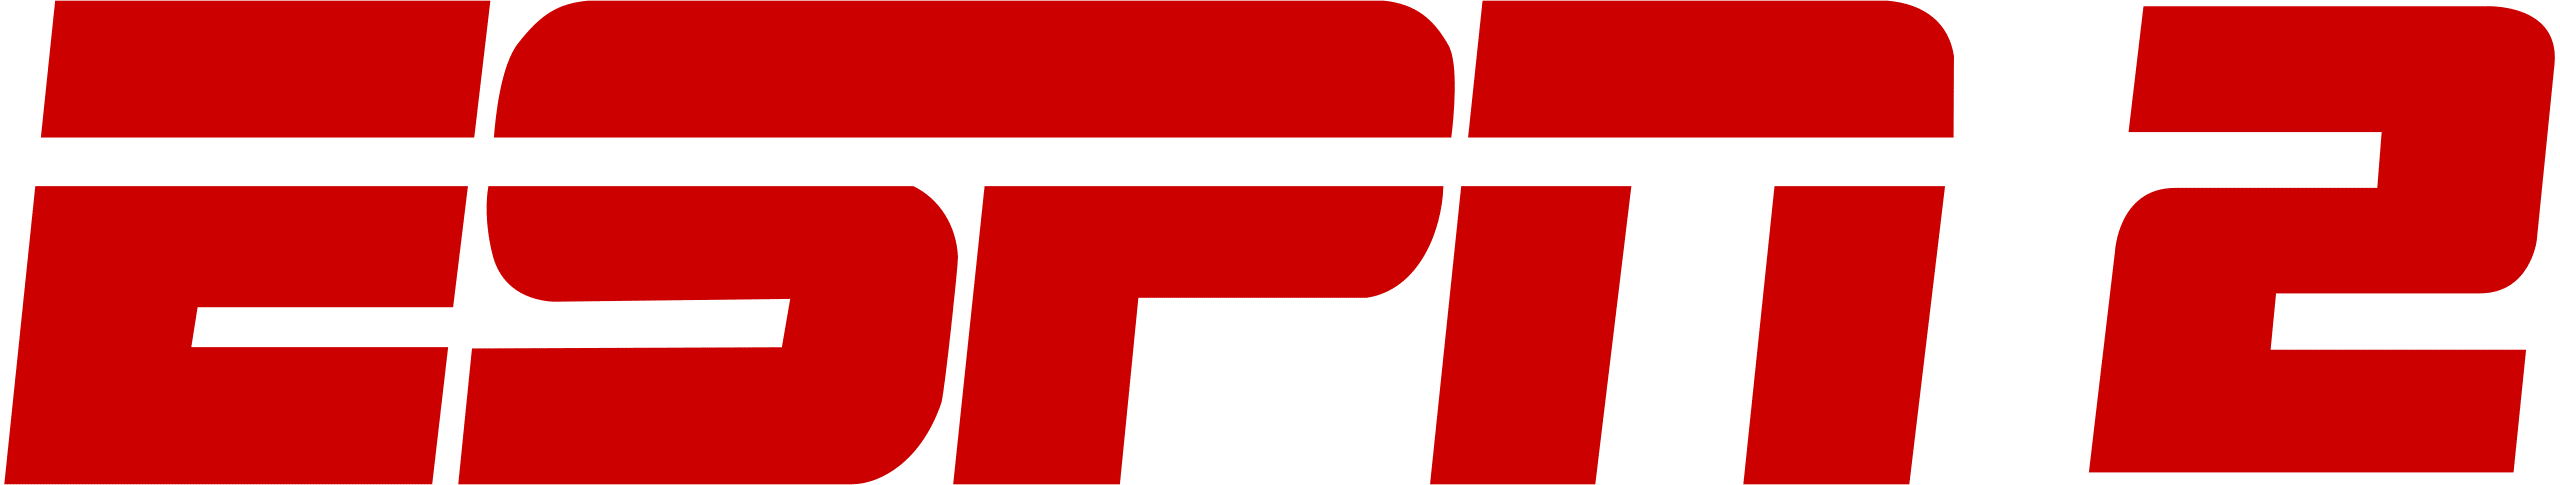 ESPN 2 Logo PNG